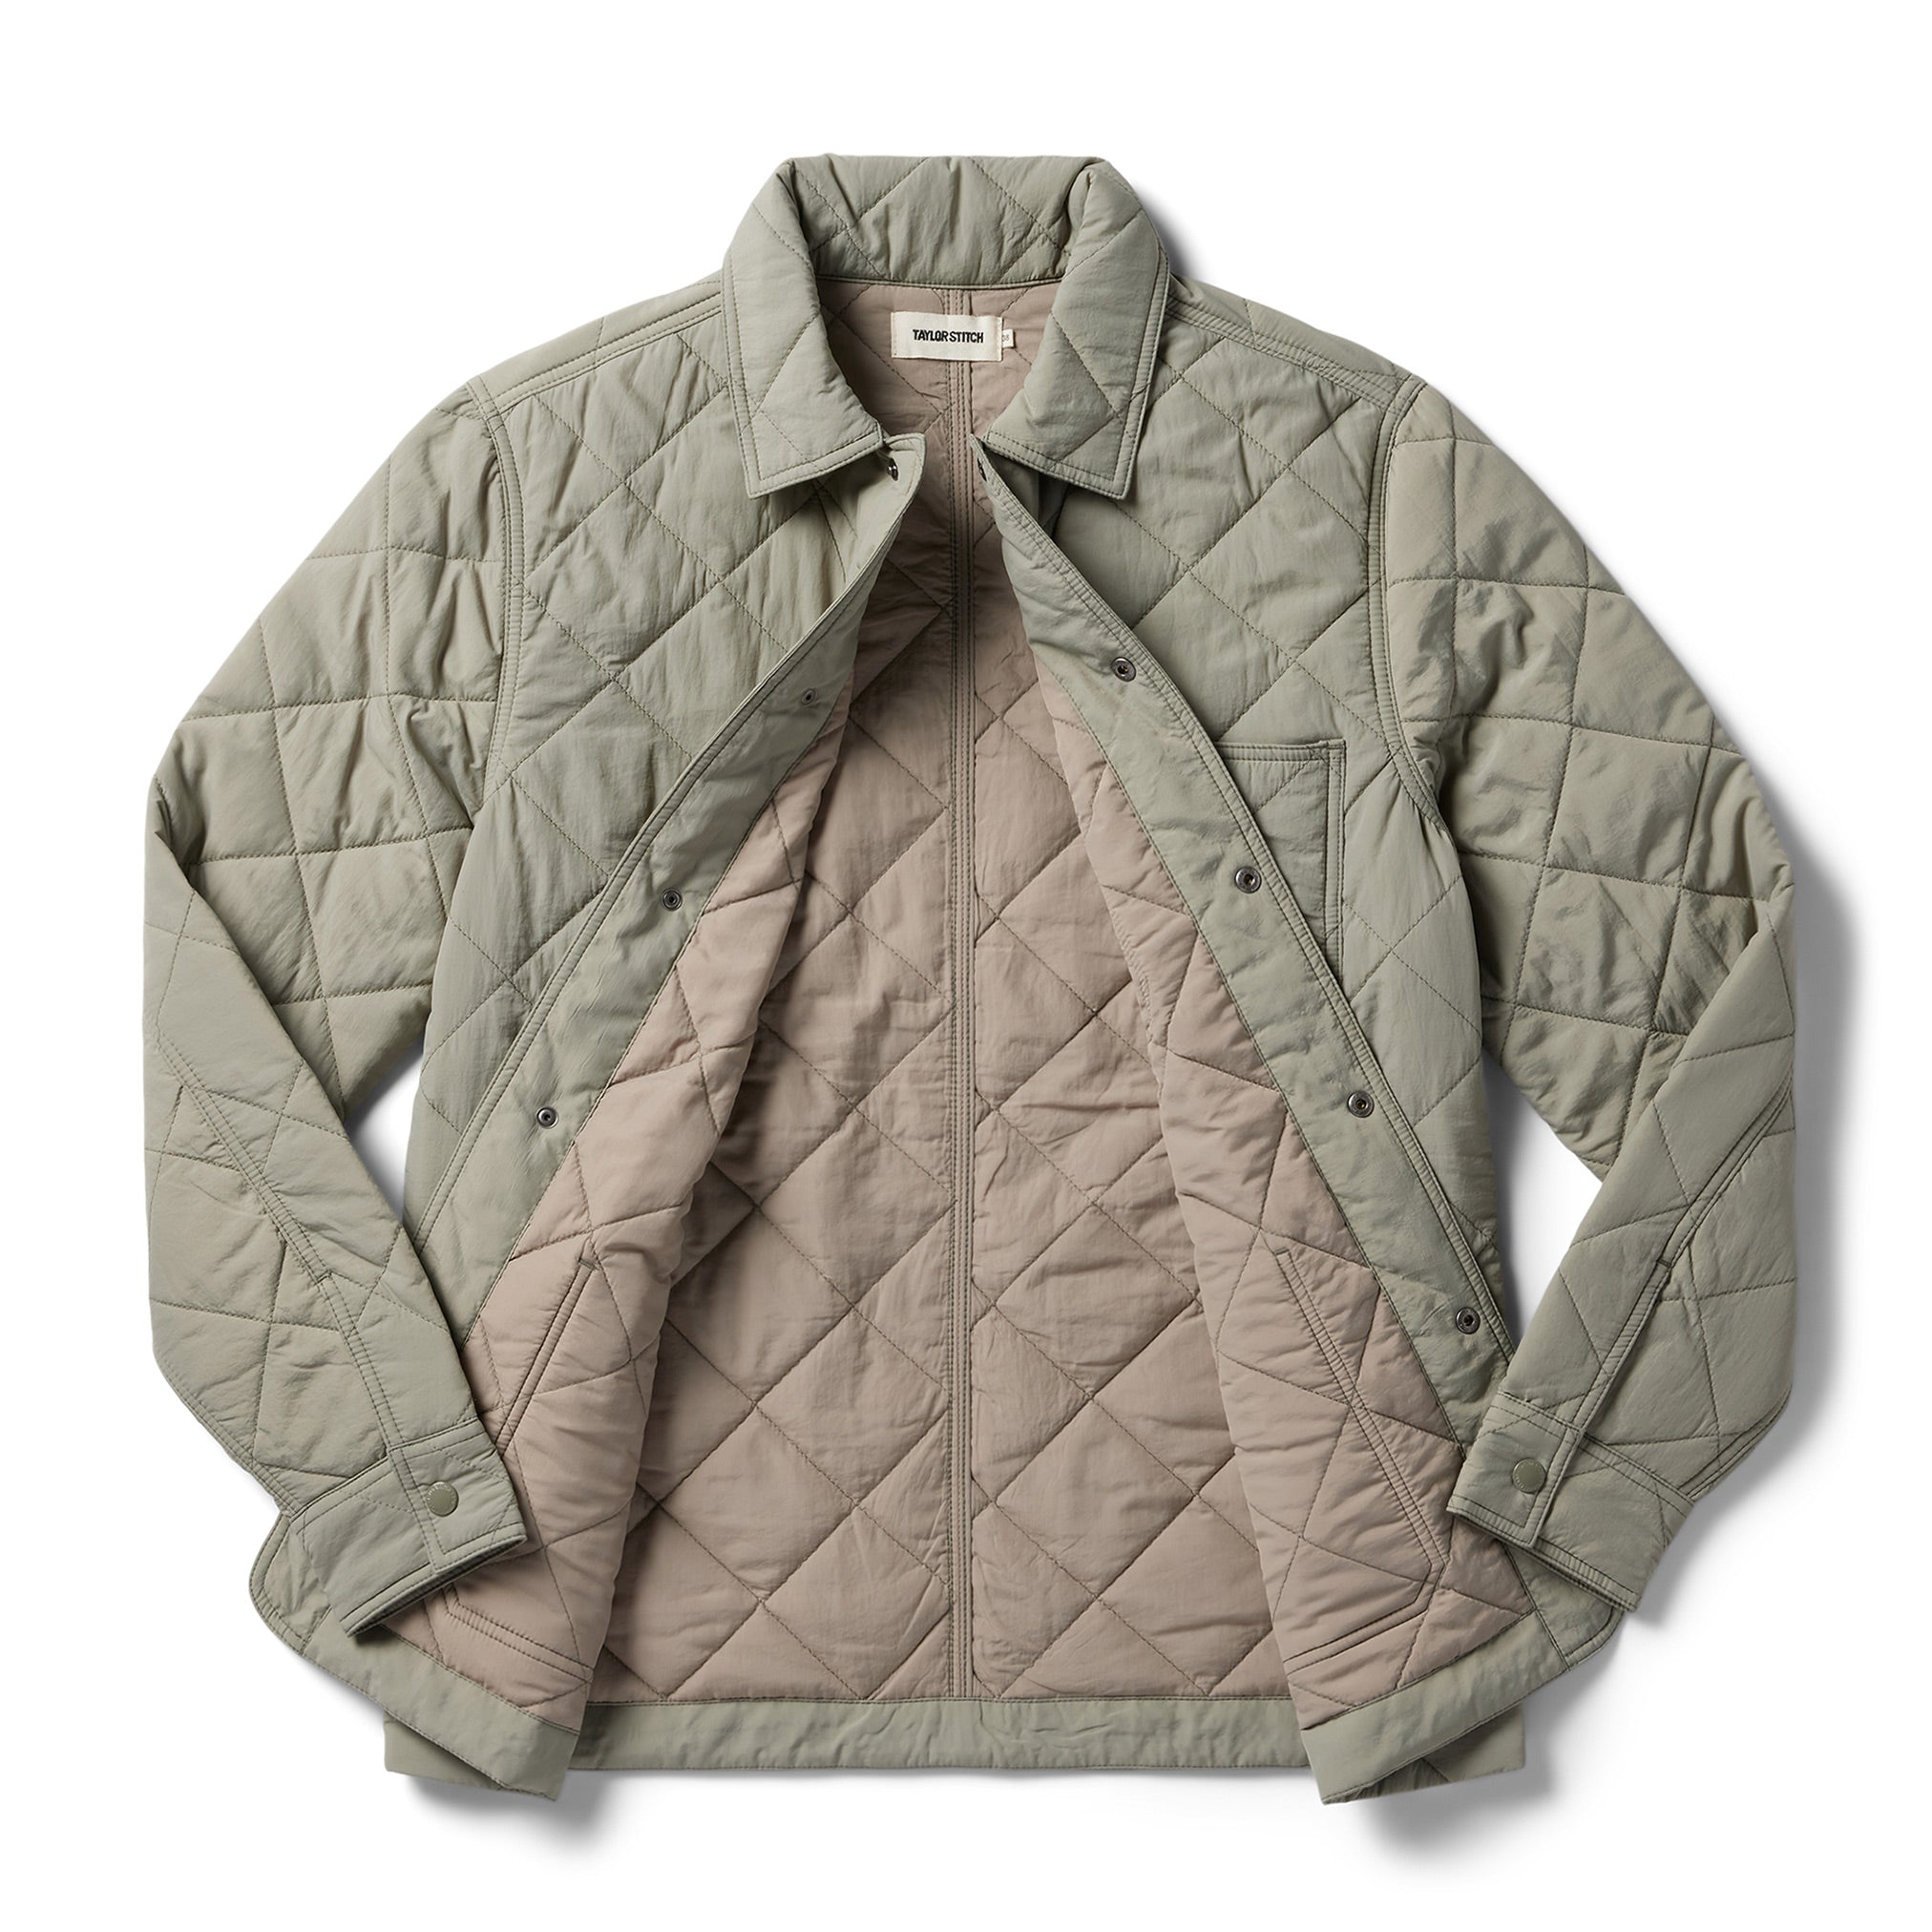 The Ojai Jacket in Sagebrush Diamond Quilt